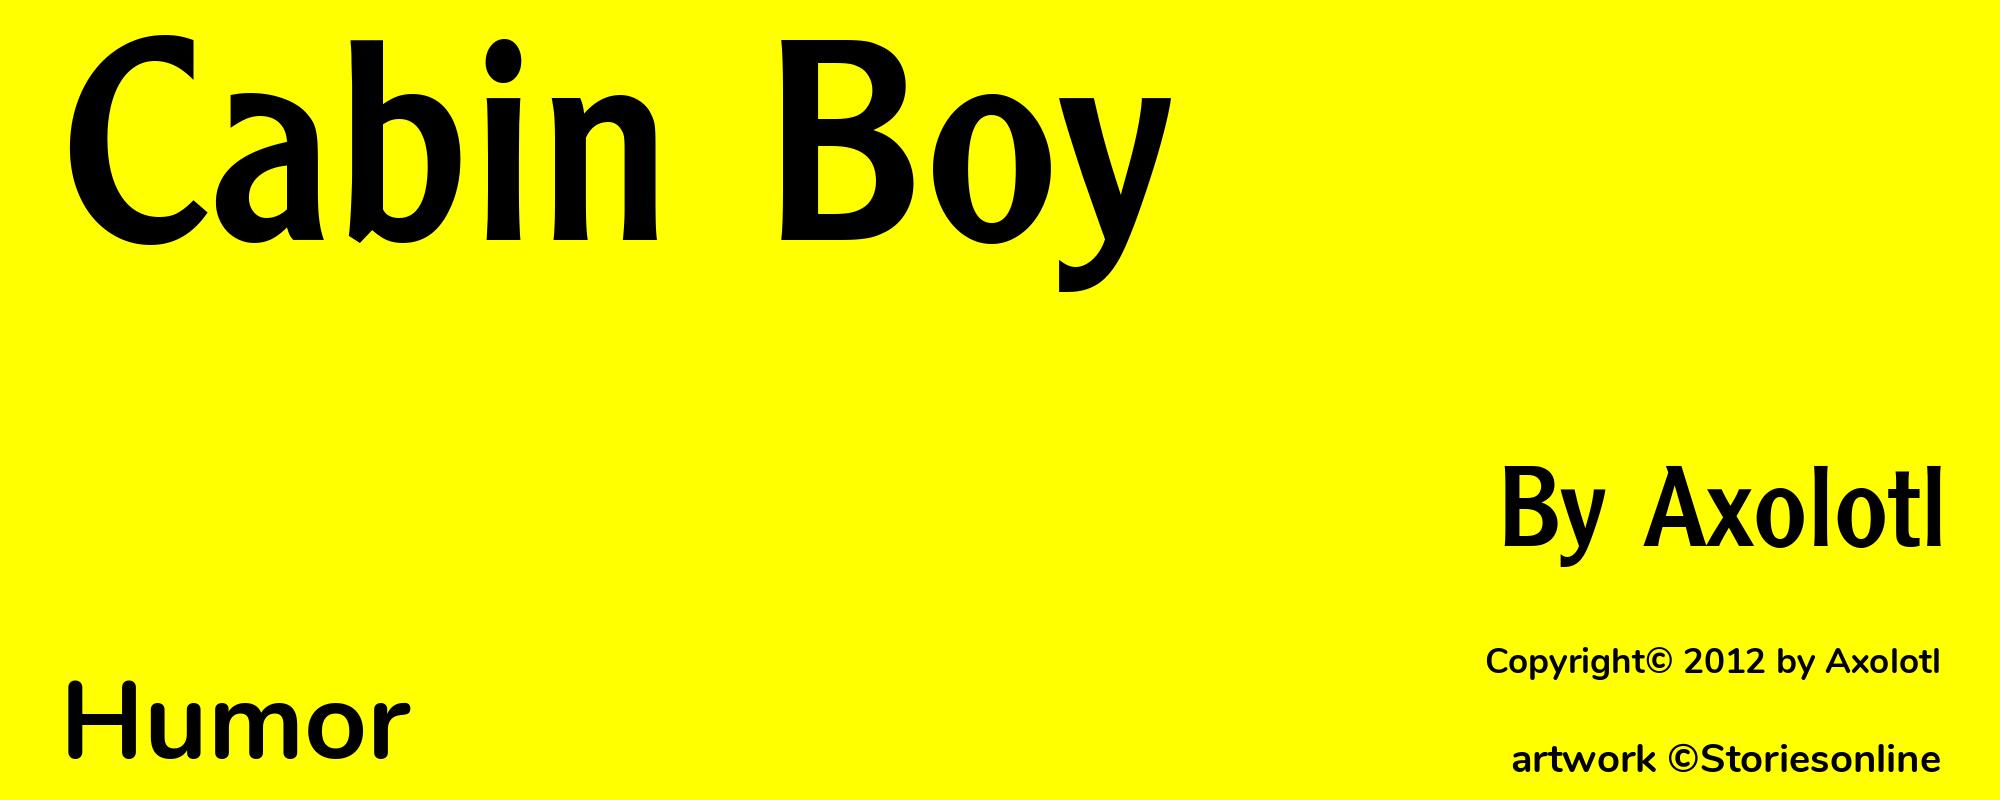 Cabin Boy - Cover